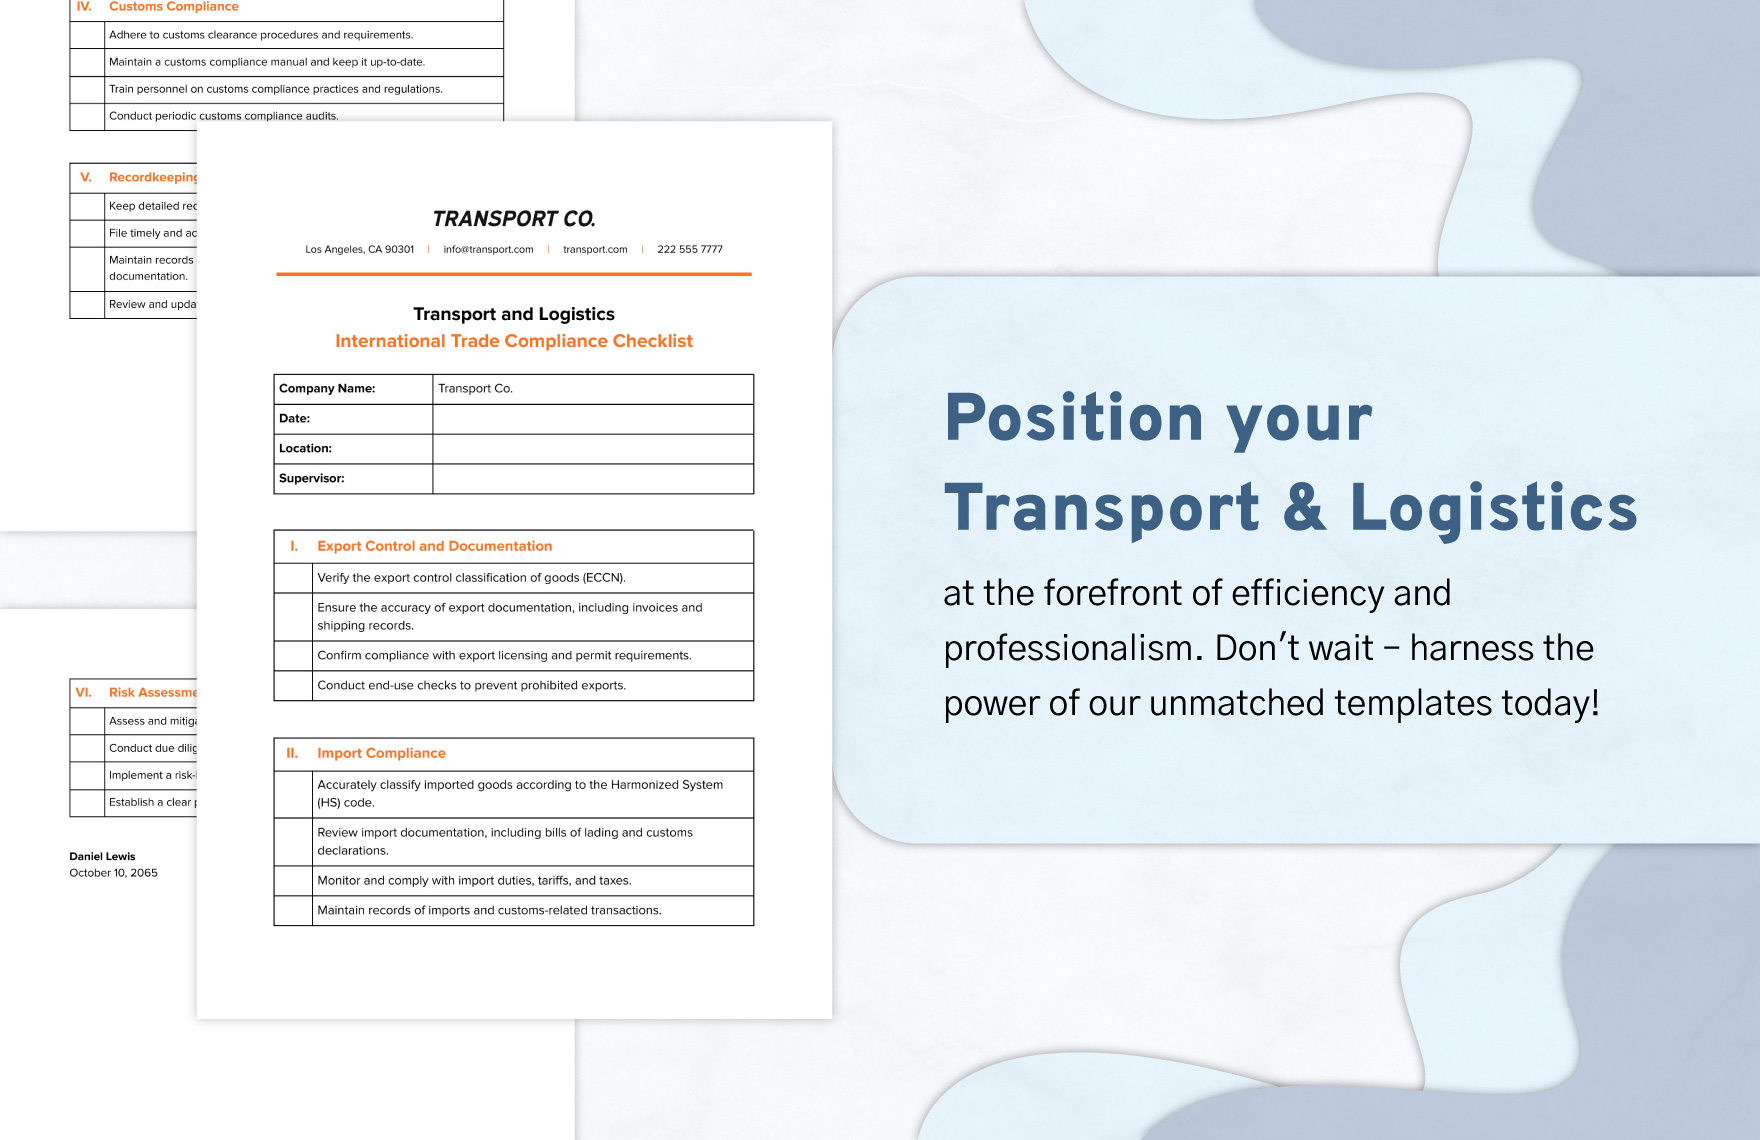 Transport and Logistics International Trade Compliance Checklist Template